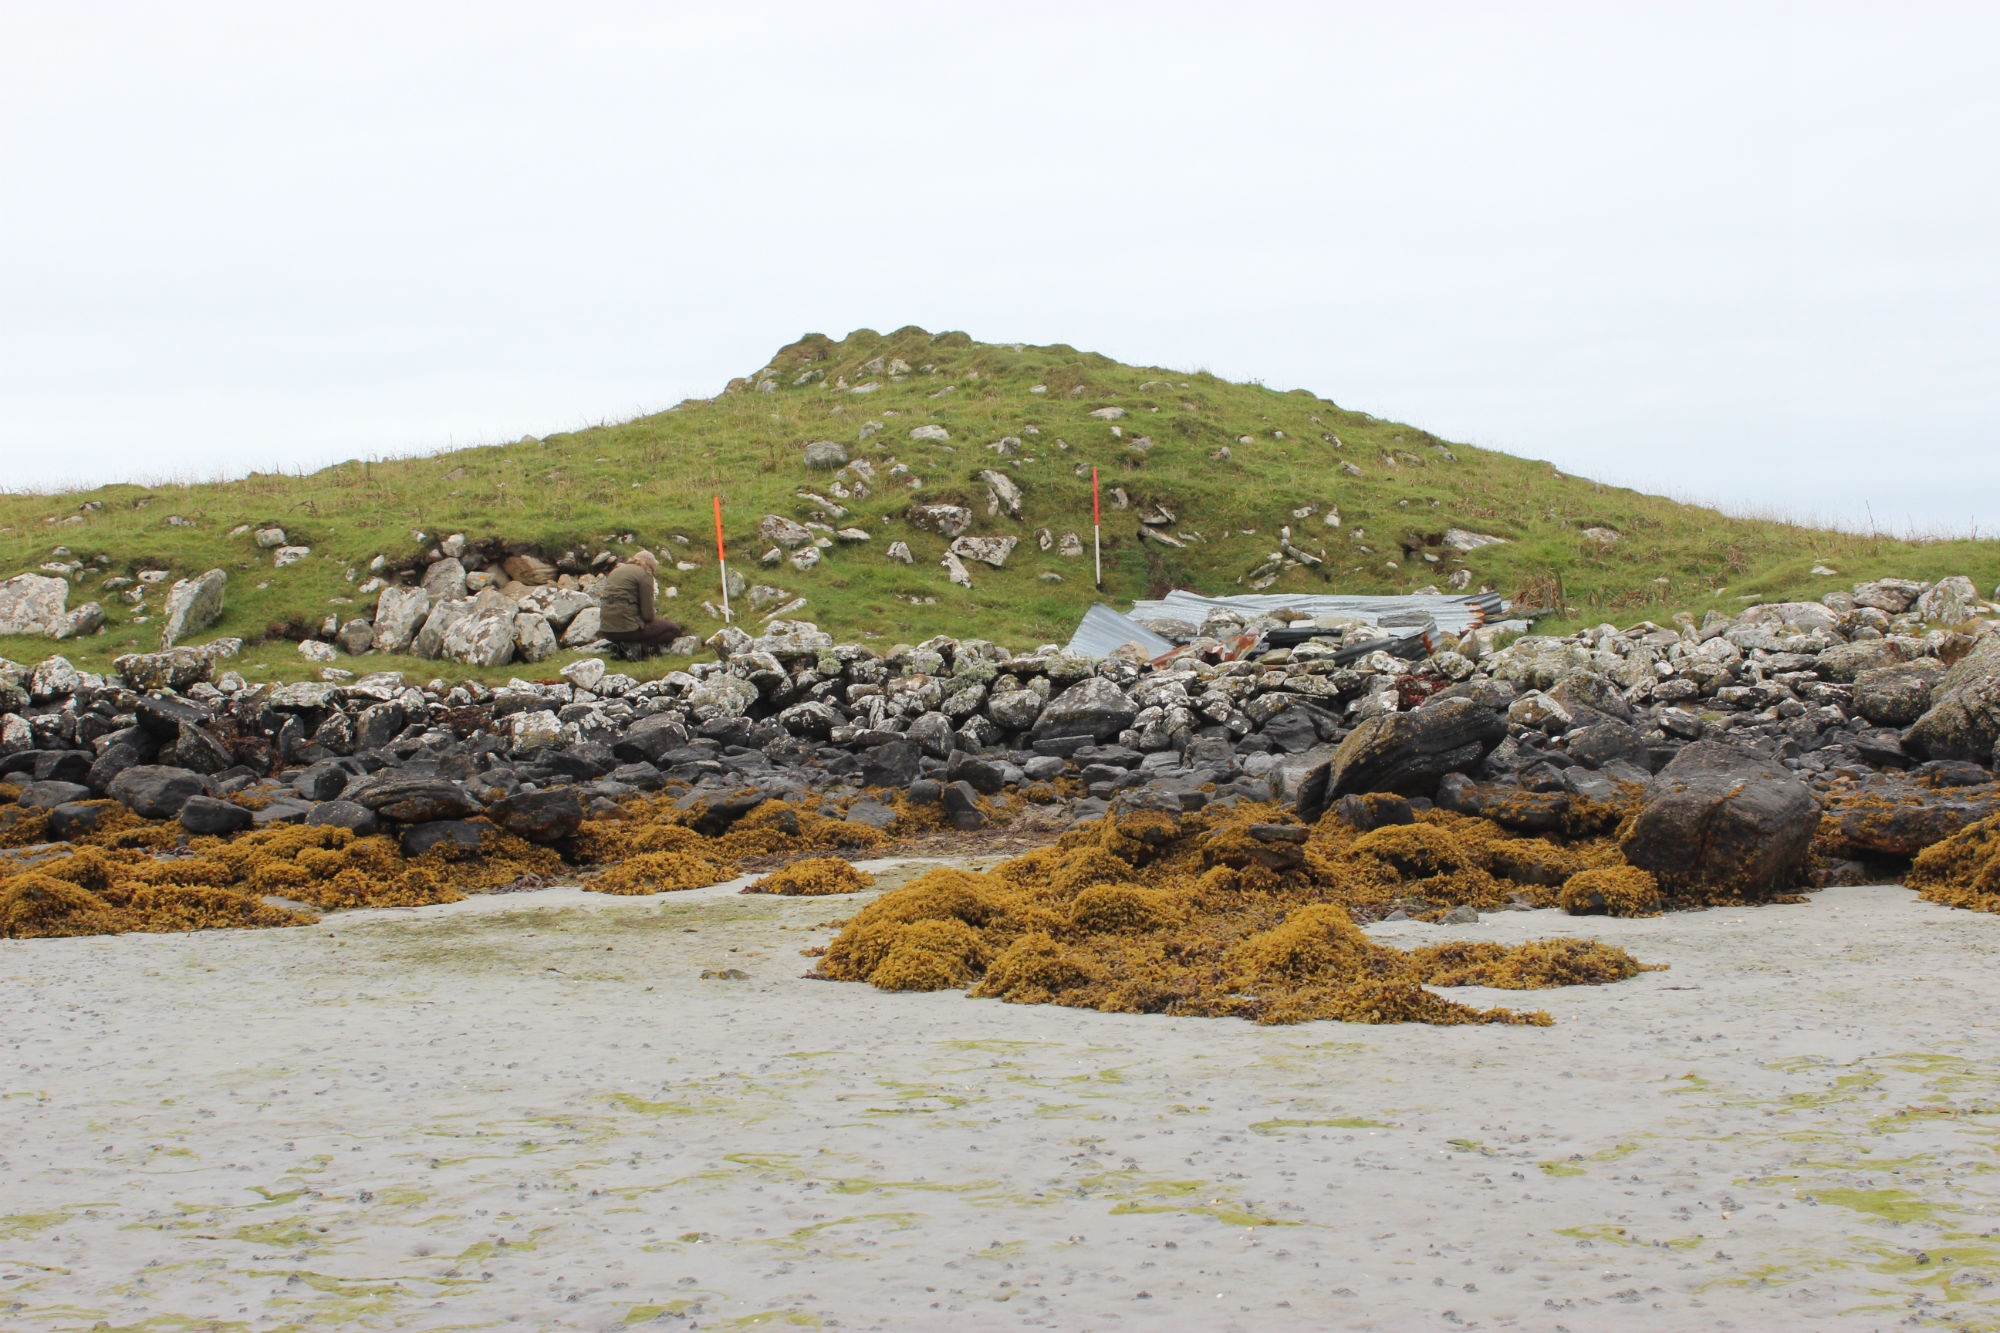 General view of seaward side of mound, looking SW